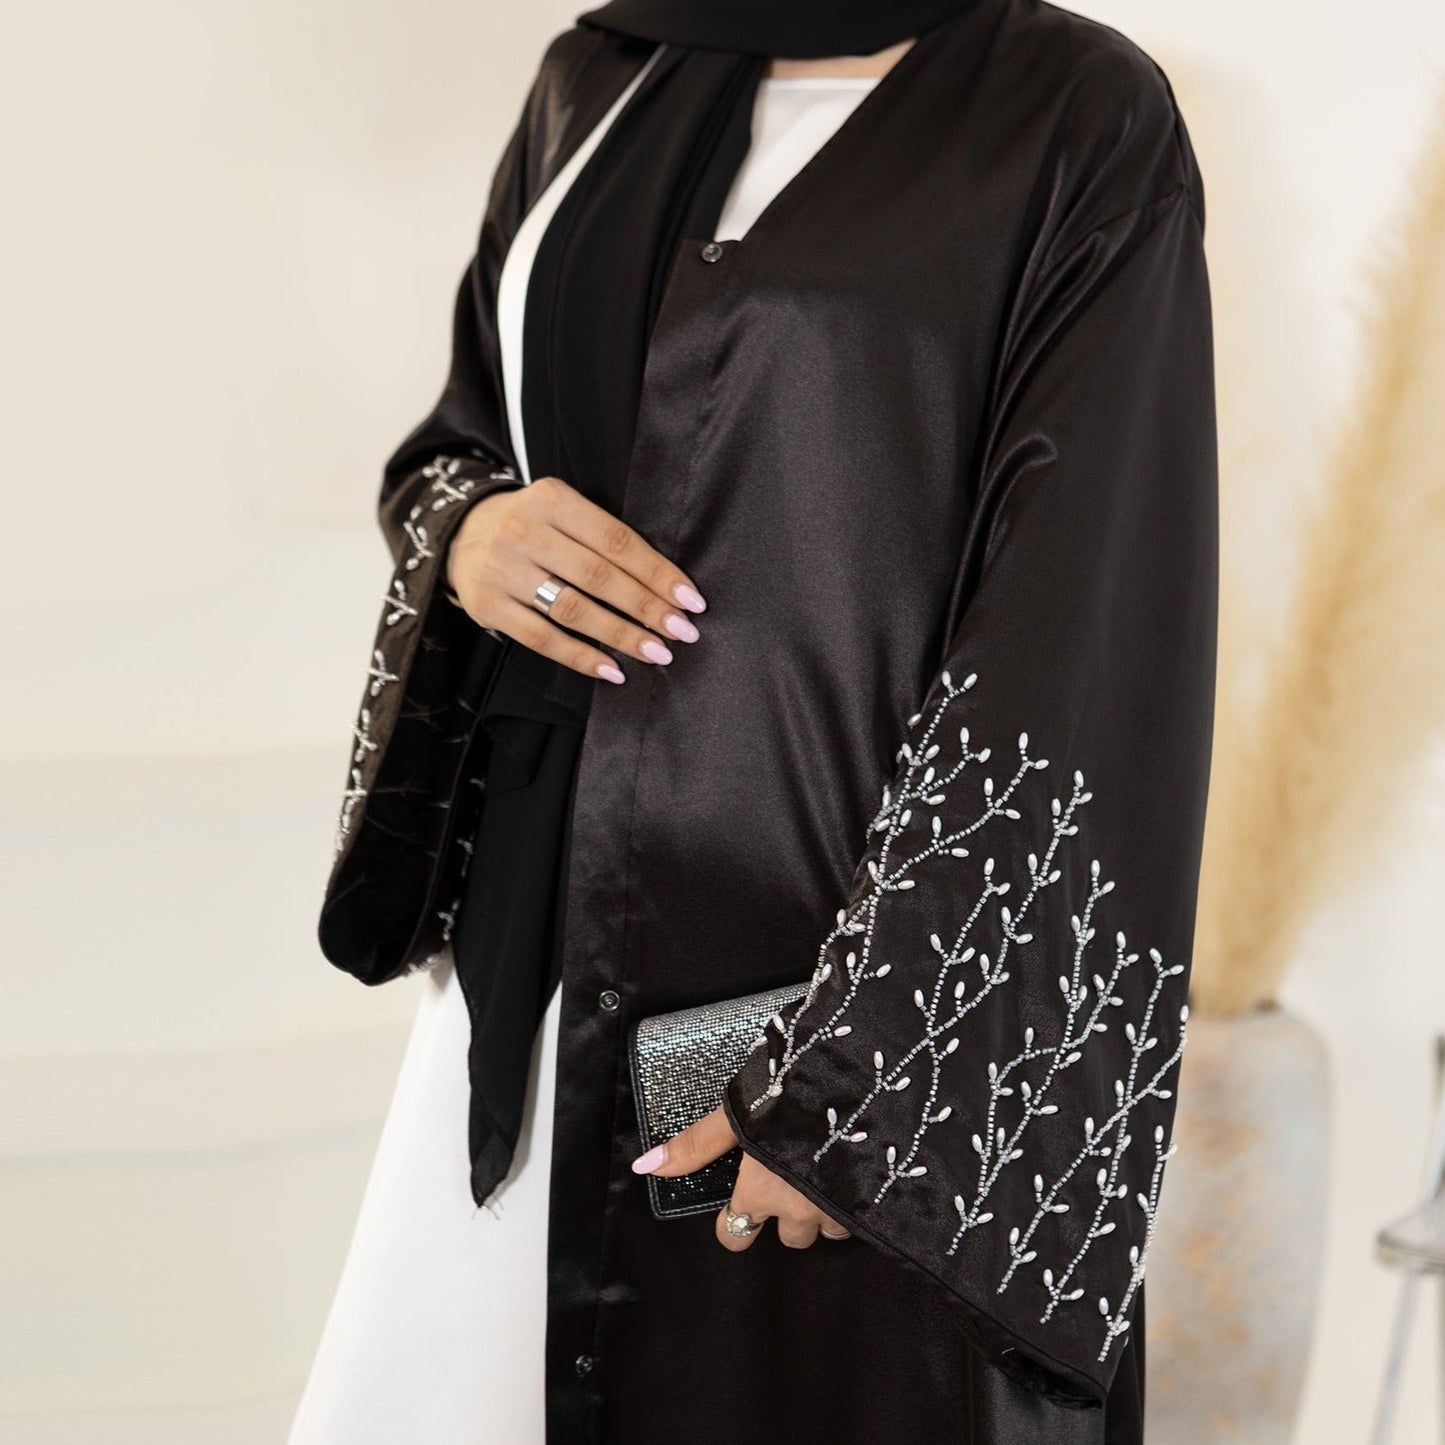 Lailah Pearl Embroidery Abaya